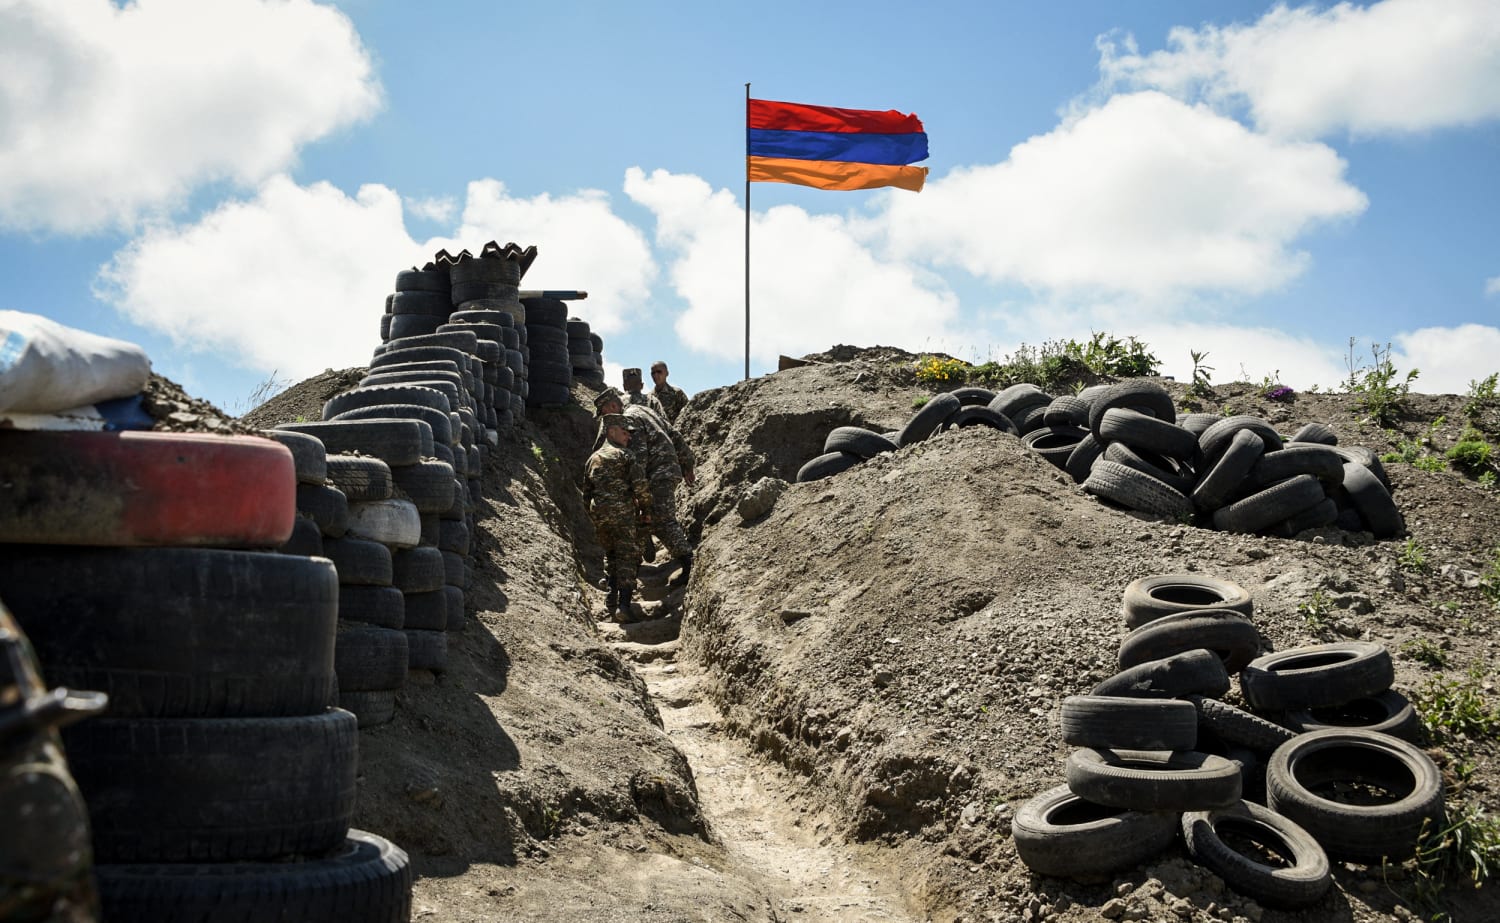 Armenia-Azerbaijan attacks: U.S. calls for end to hostilities